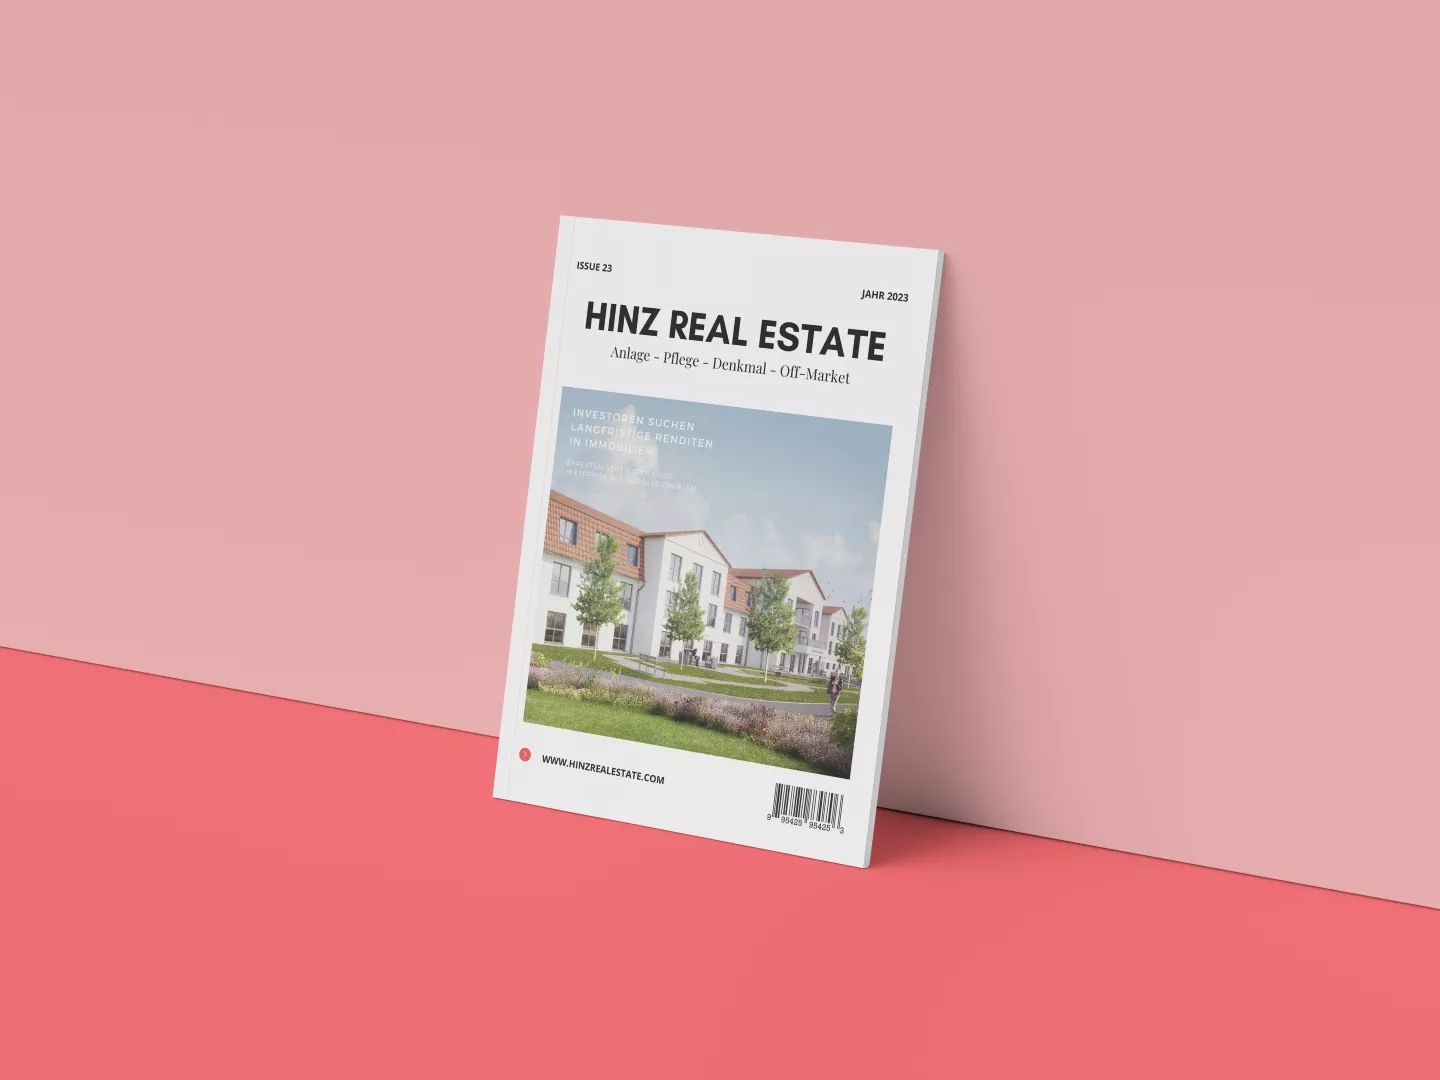 Hinz Real Estate Anlageimmobilien und Pflegeimmobilien - Haus 